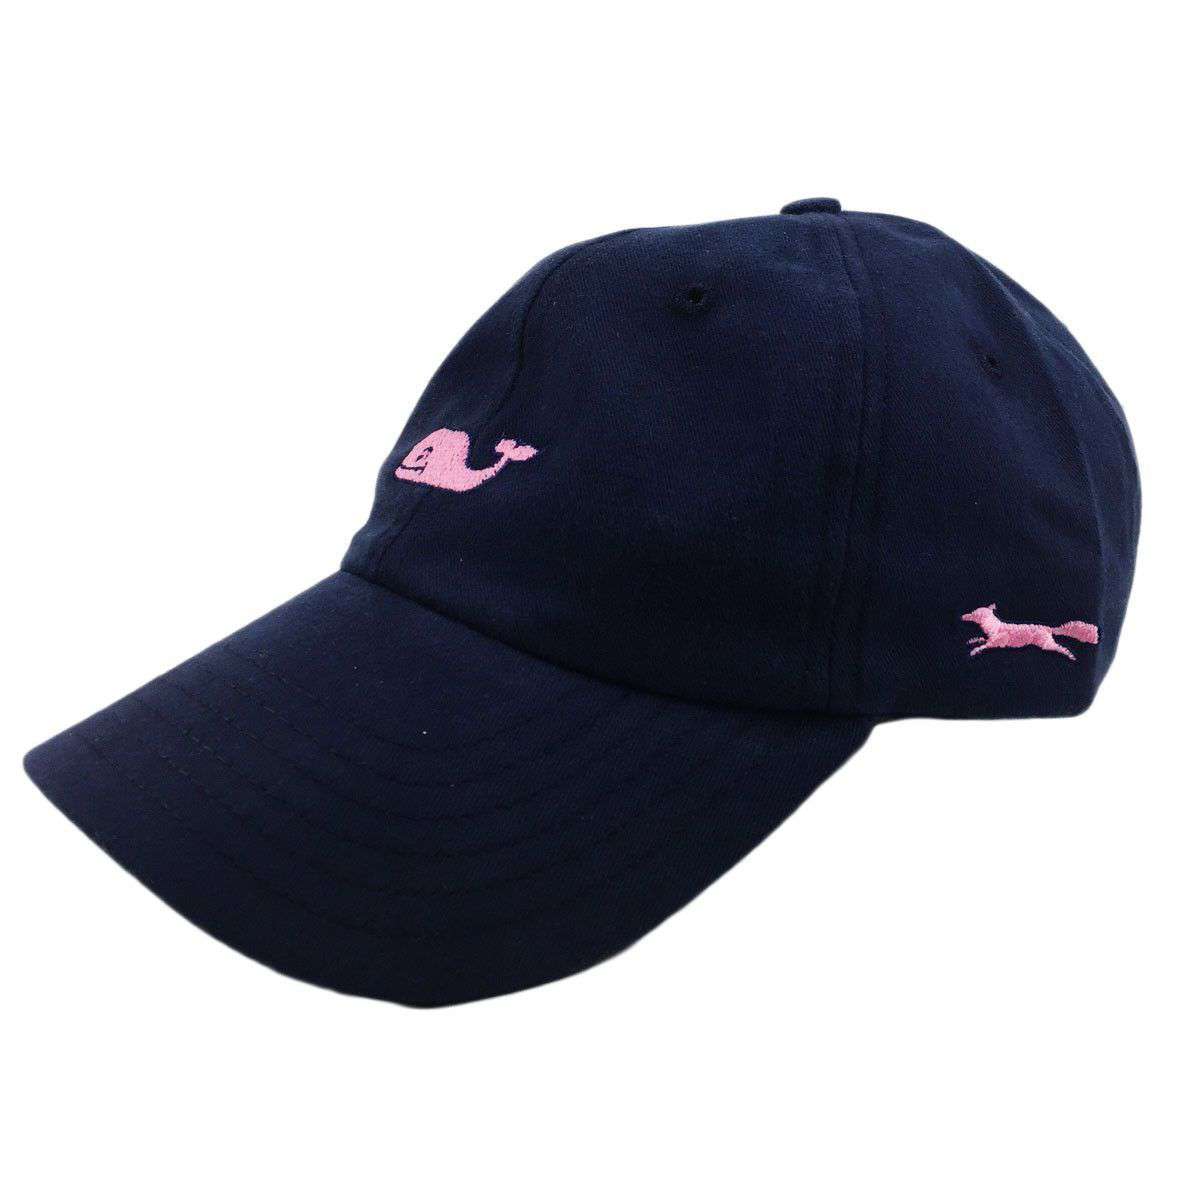 Whale Logo Baseball Hat in Blue Blazer w/ Pink Longshanks by Vineyard Vines - Country Club Prep